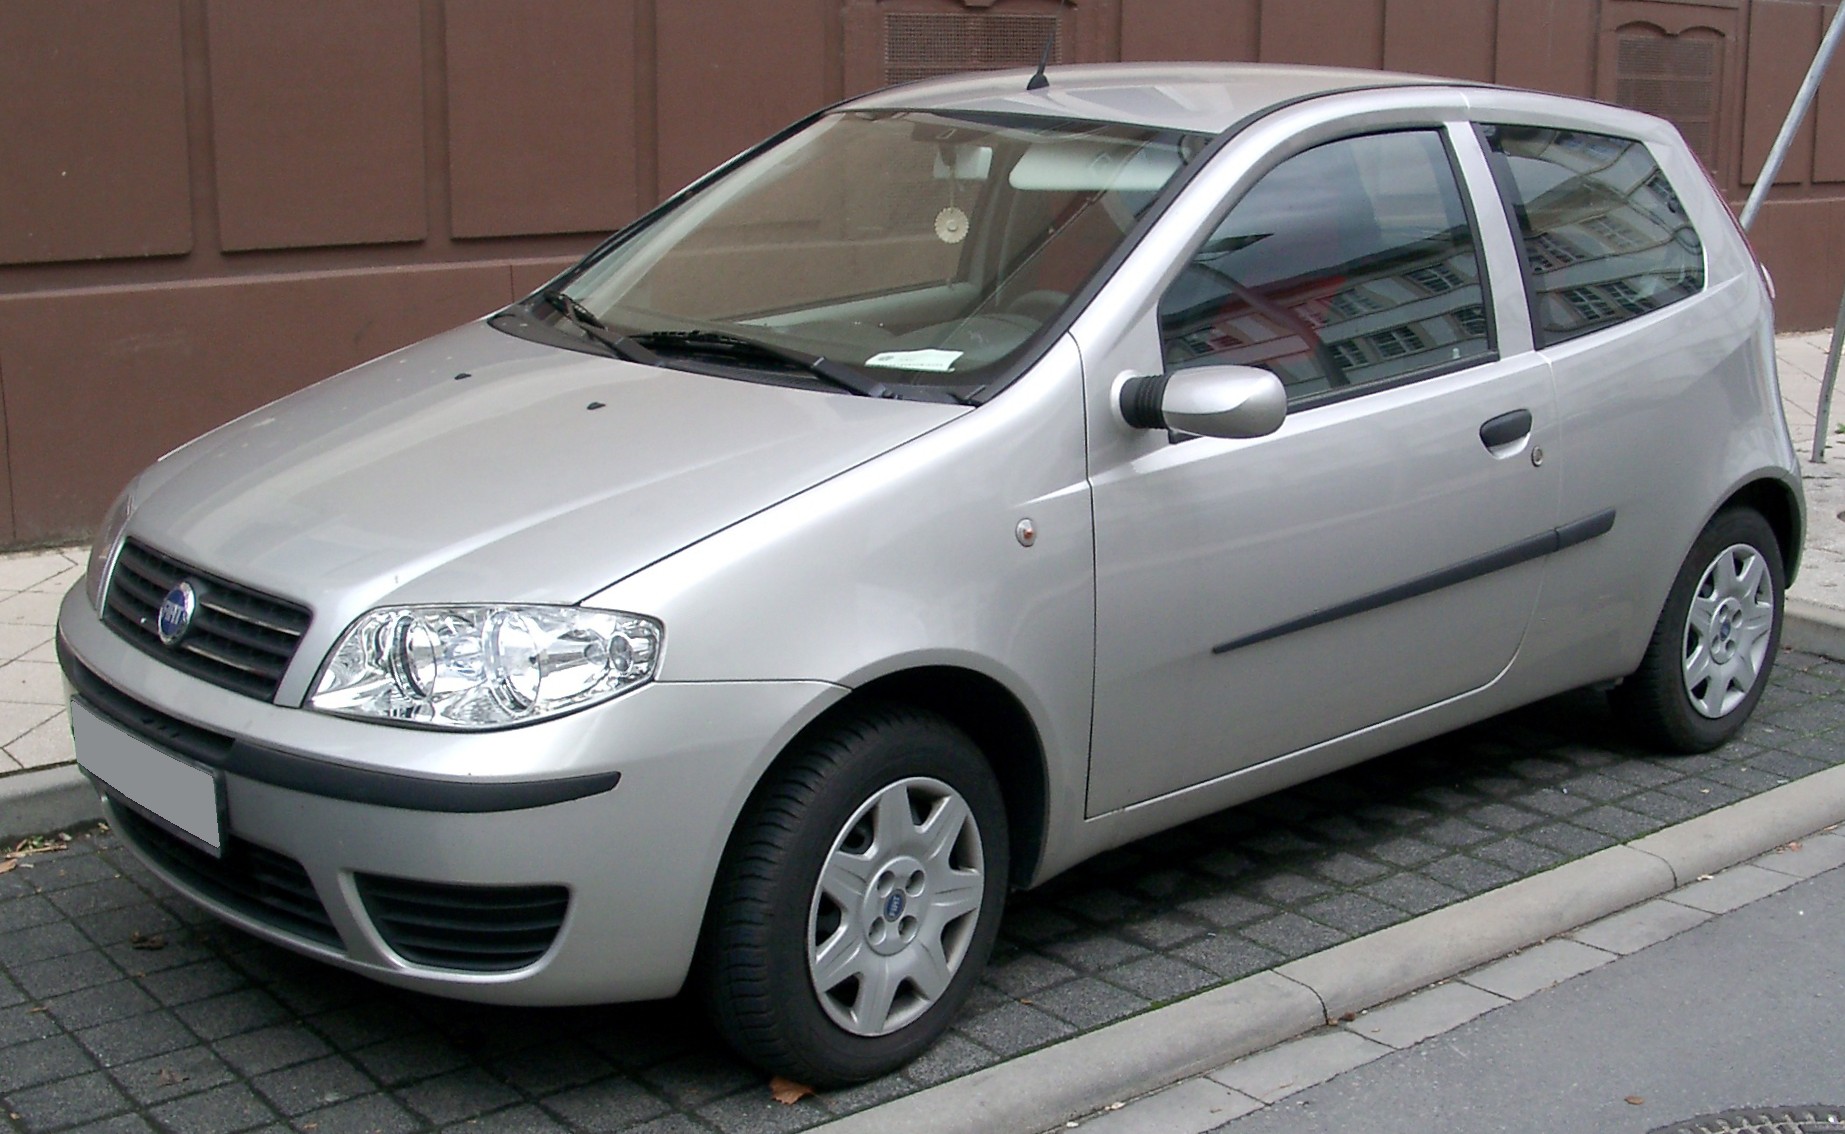 File:Fiat Grande Punto black 3-door.jpg - Wikimedia Commons